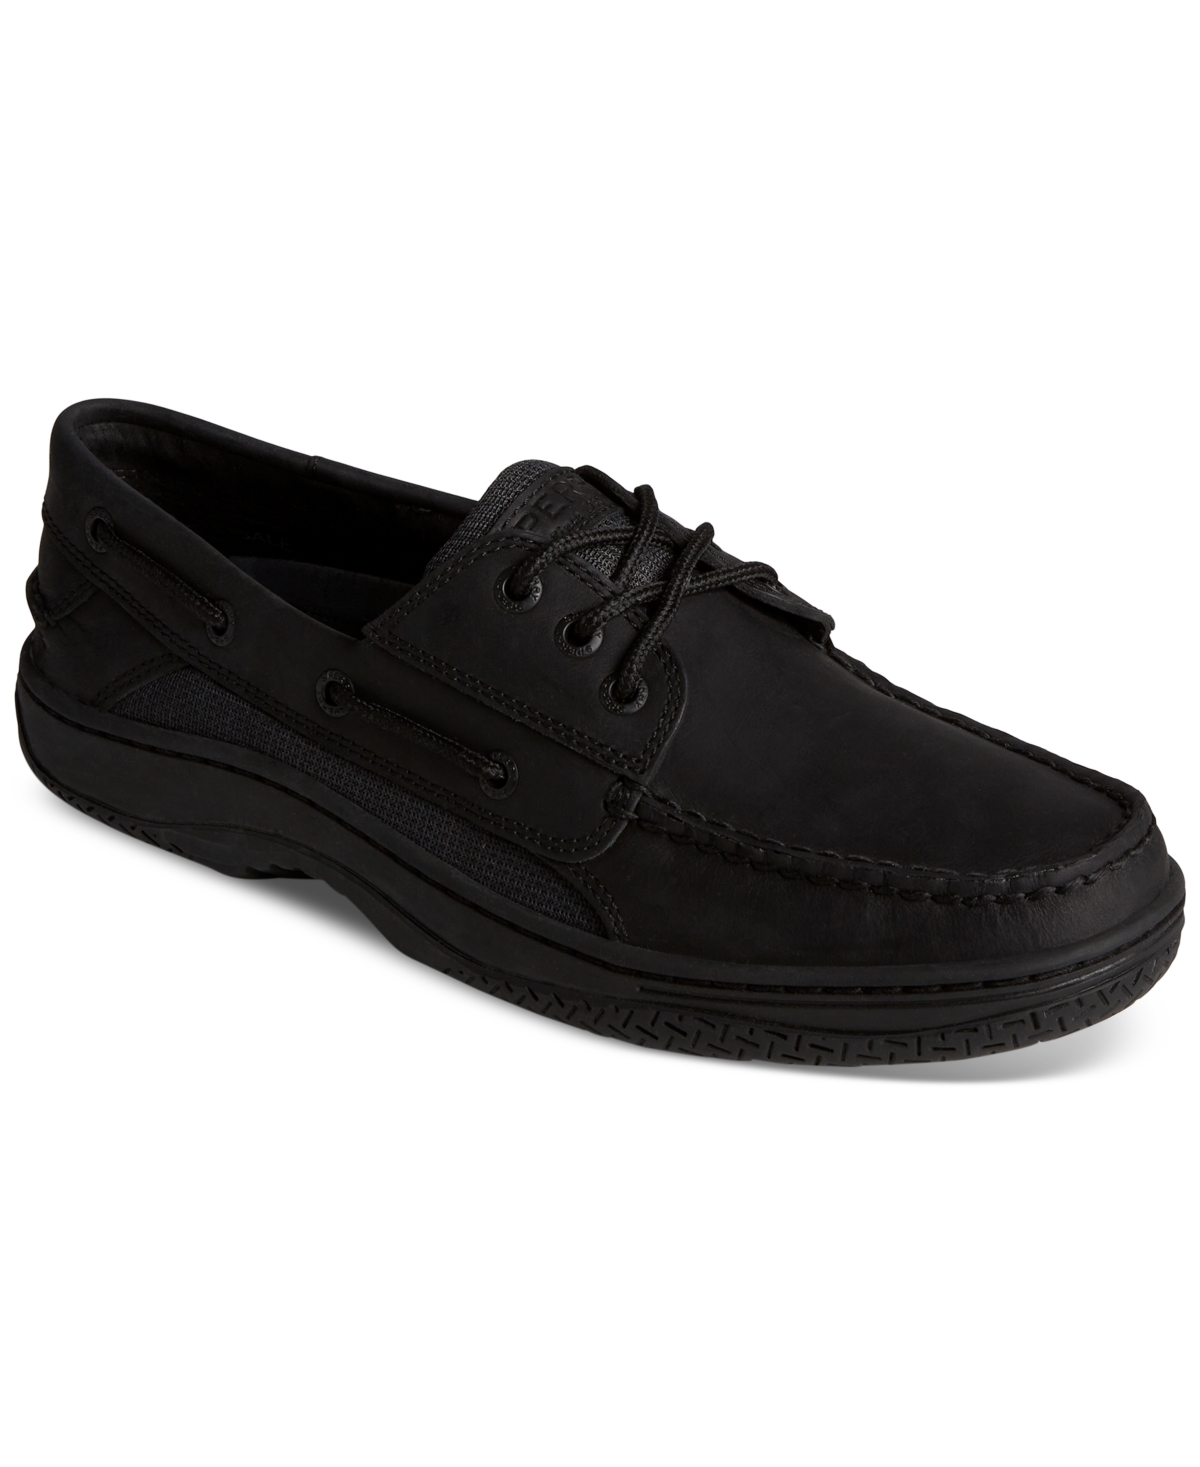 Men's Billfish 3-Eye Moc Toe Boat Shoes - Black